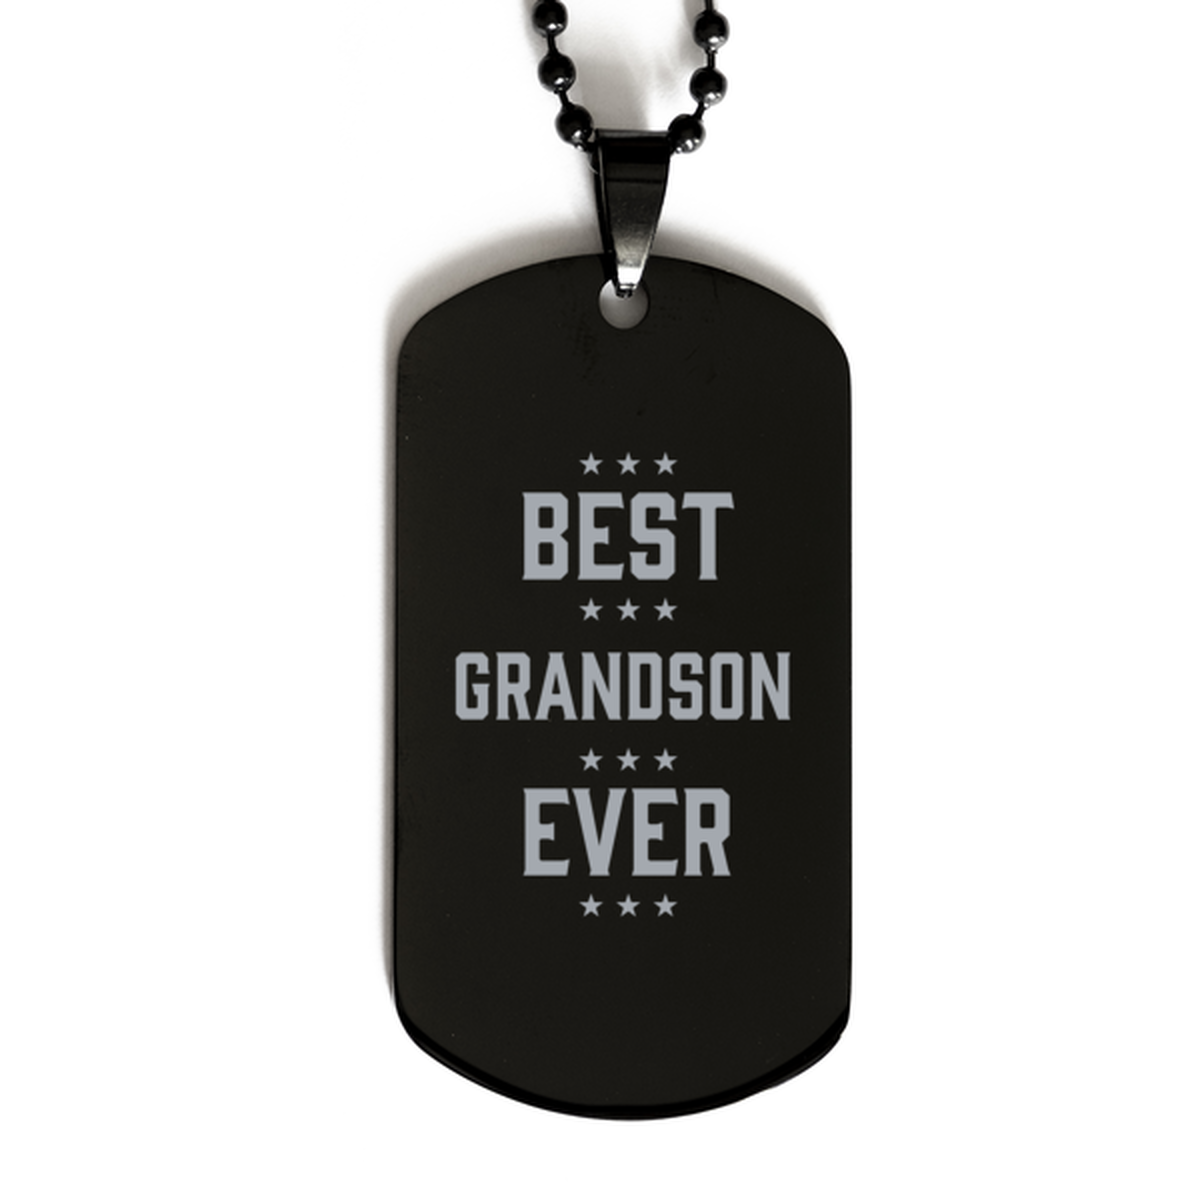 Best Grandson Ever Grandson Gifts, Funny Black Dog Tag For Grandson, Birthday Family Presents Engraved Necklace For Men